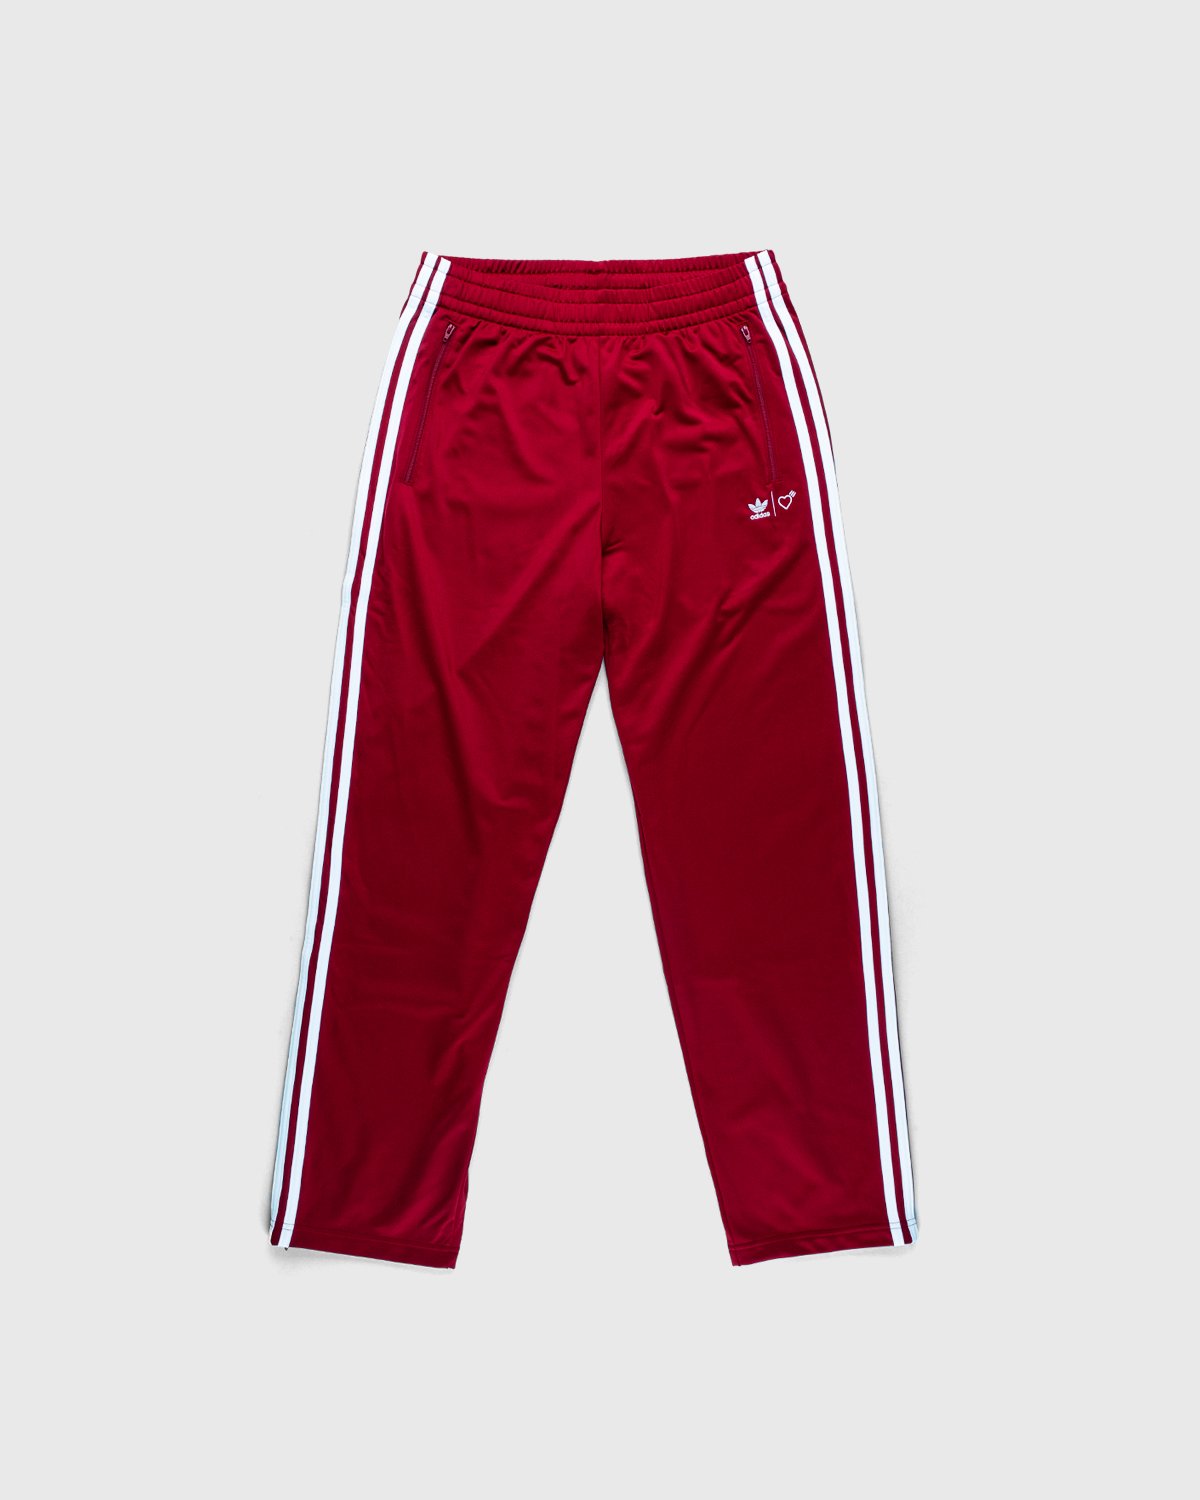 adidas Originals x Human Made - Firebird Track Pants Burgundy - Clothing - Red - Image 1